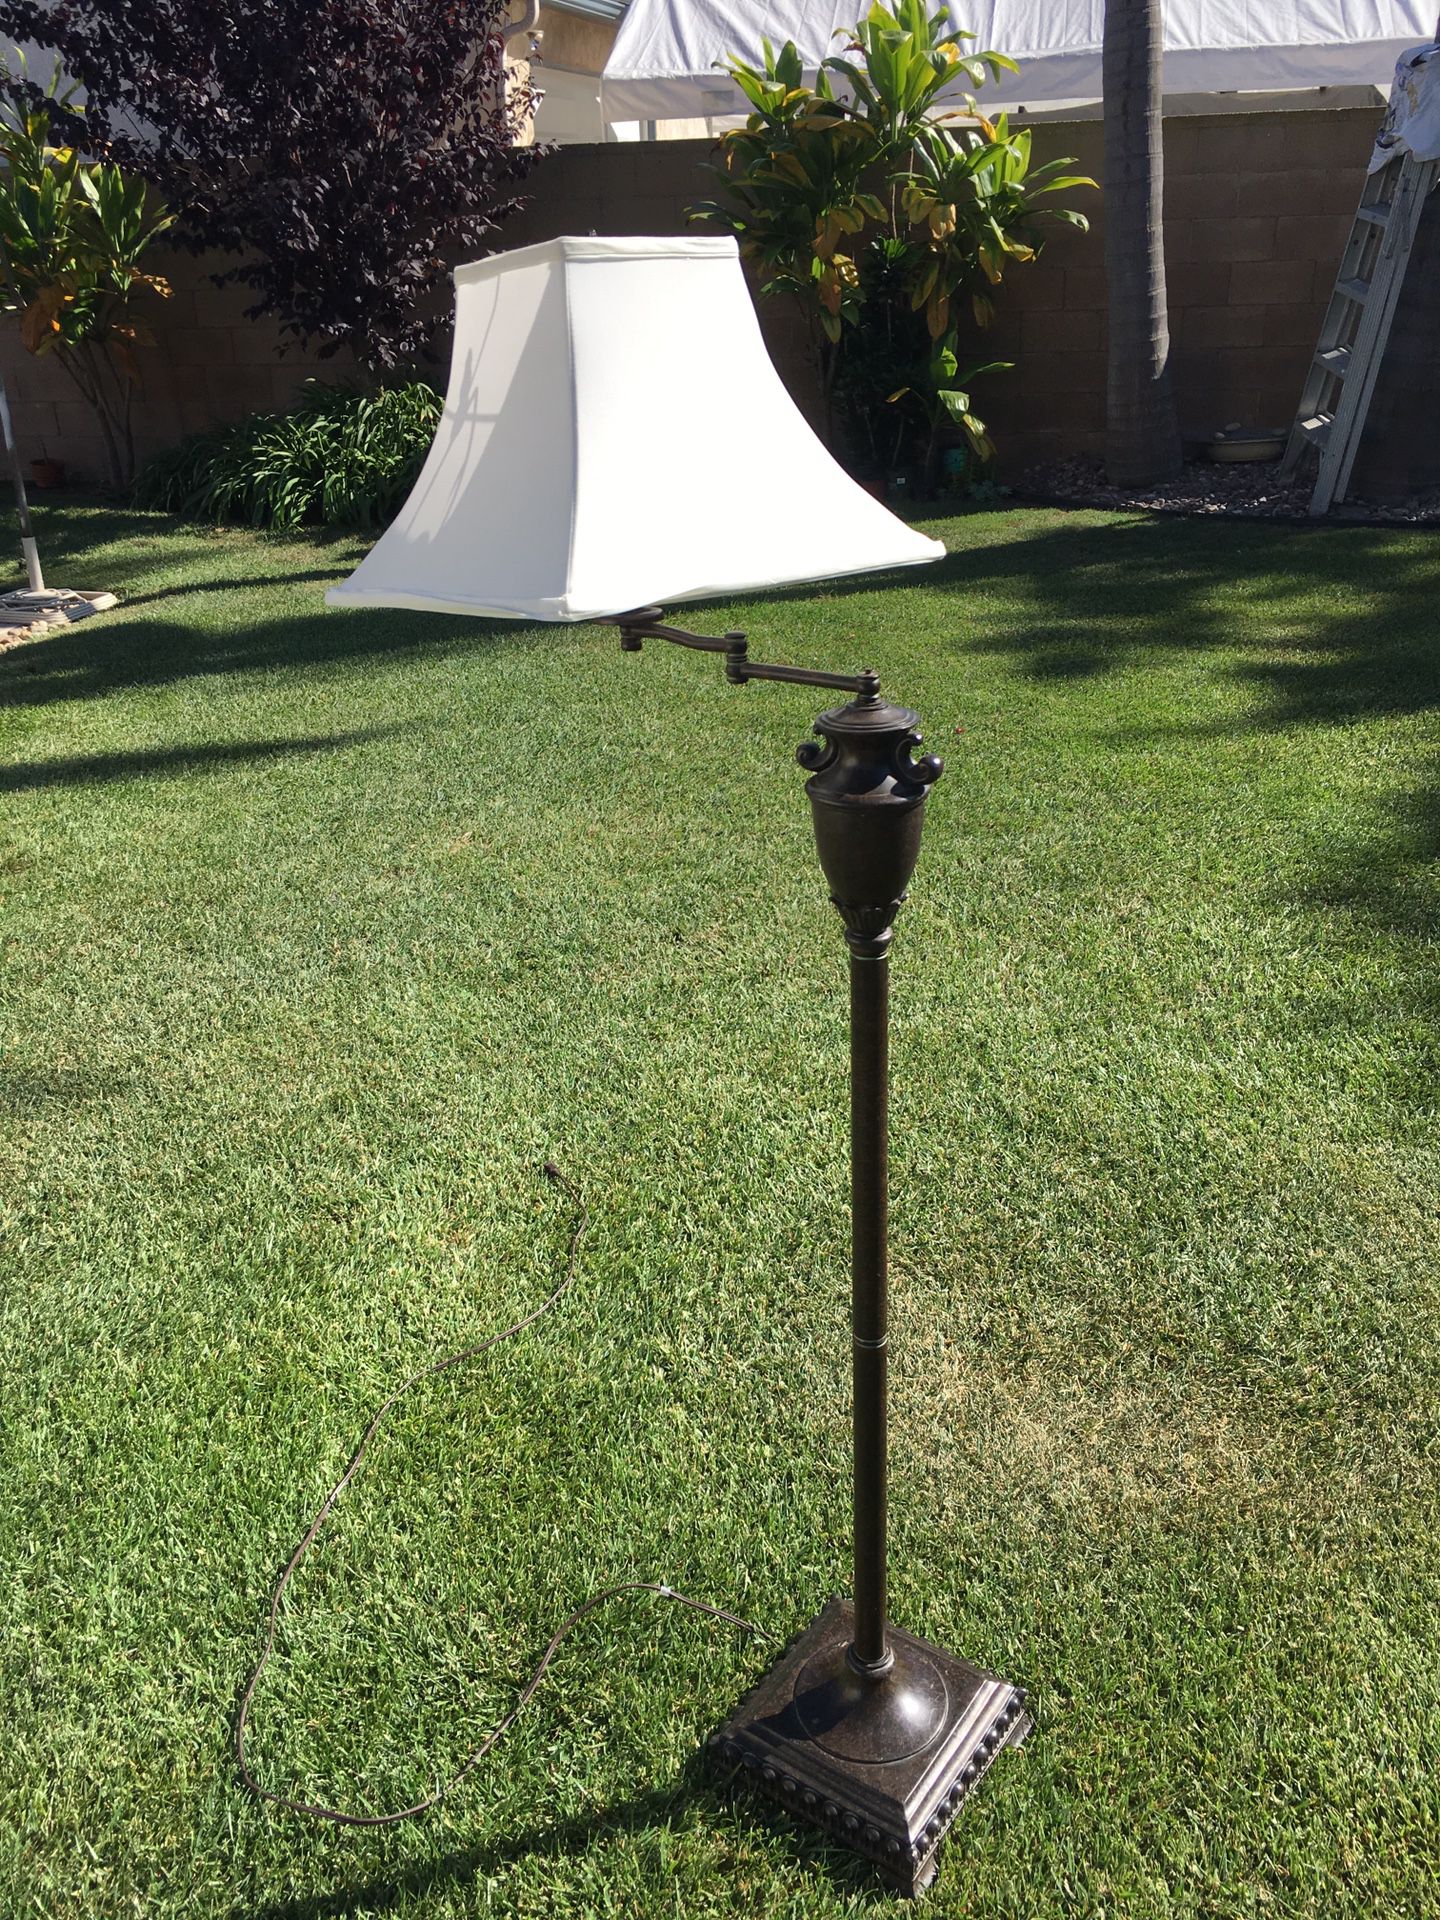 PRICE LOWERED! Swing arm floor lamp-antique bronze finish